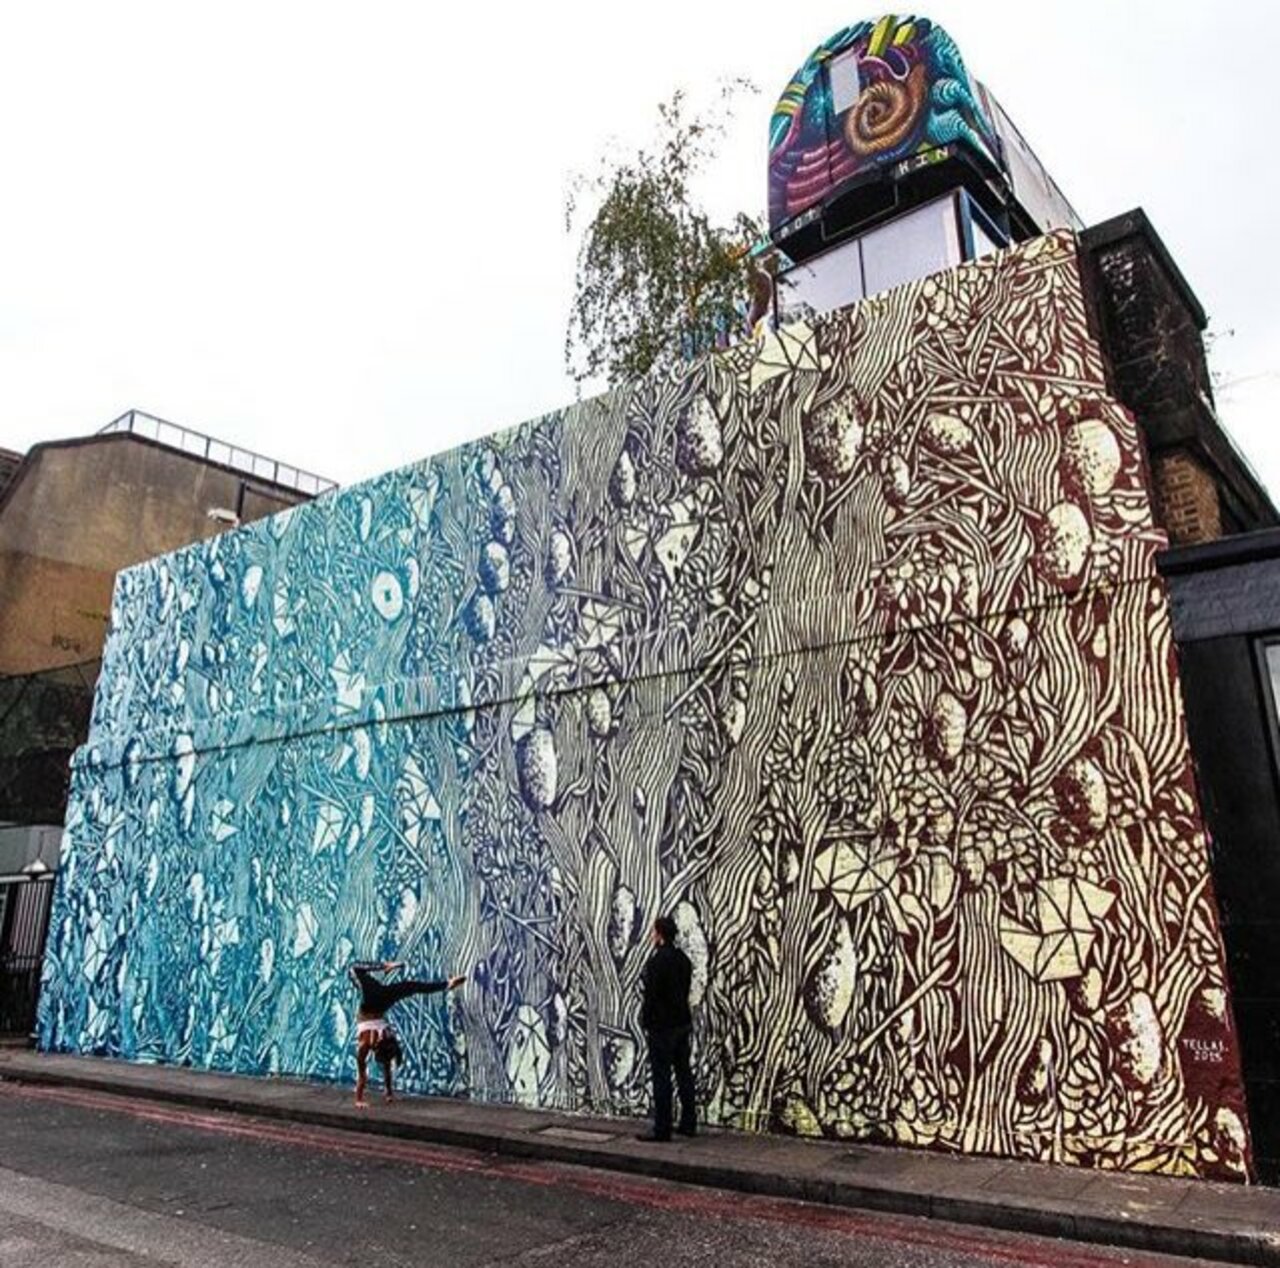 New Street Art by Tellas in Shoreditch London 

#art #graffiti #mural #streetart https://t.co/GBPPHcVEB4